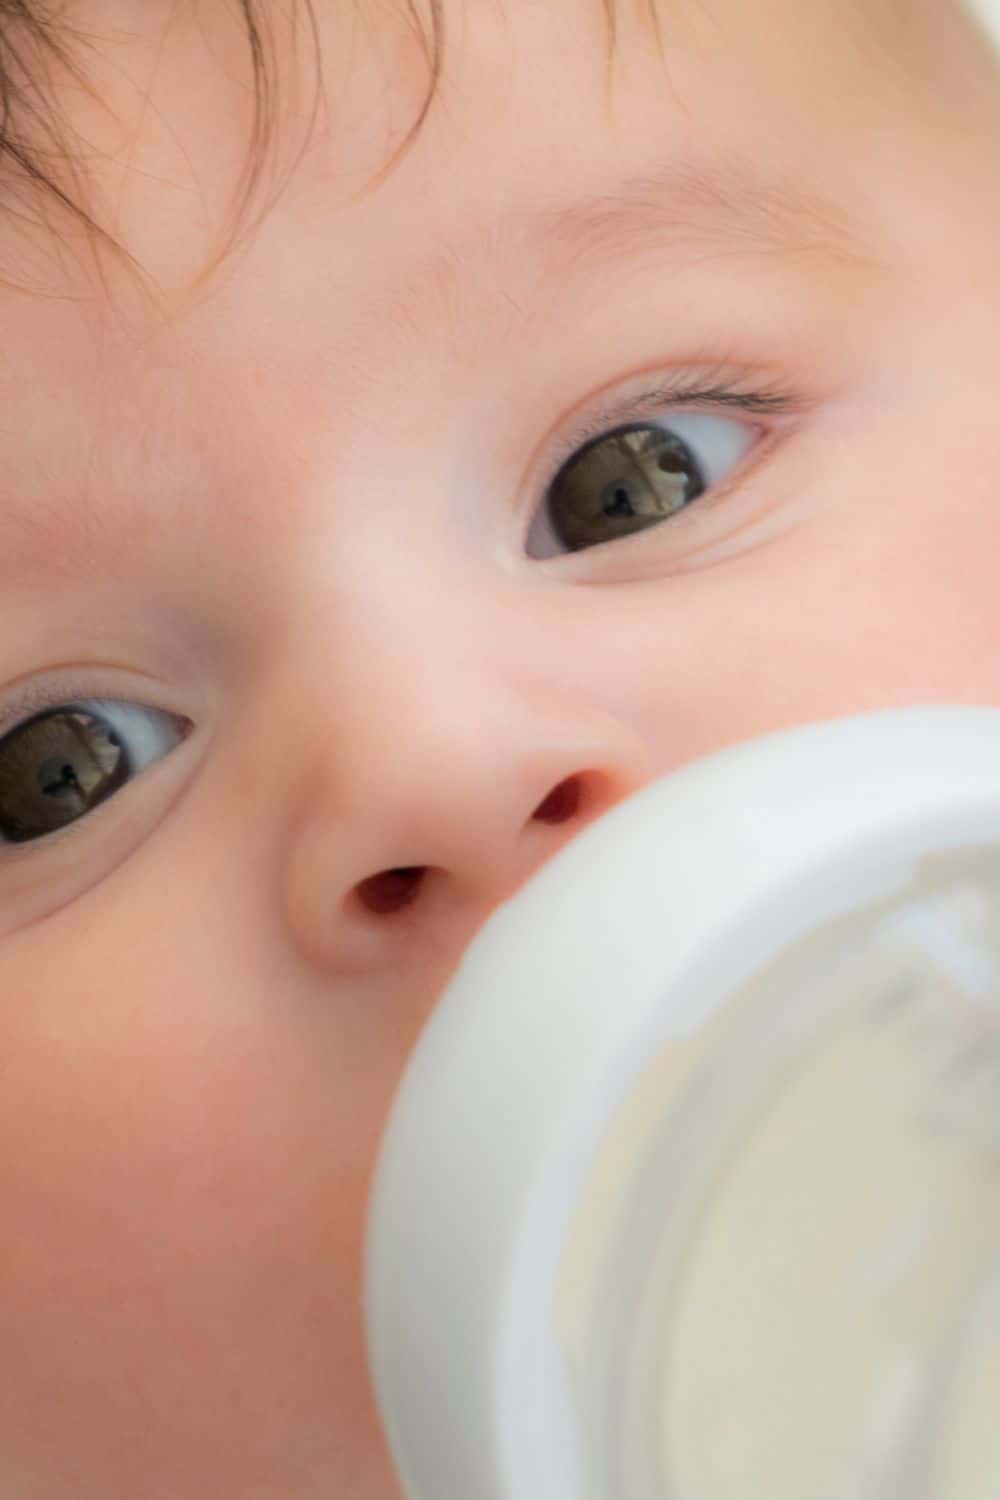 Best Feeding Positions for Bottle-Fed Breastfed Babies